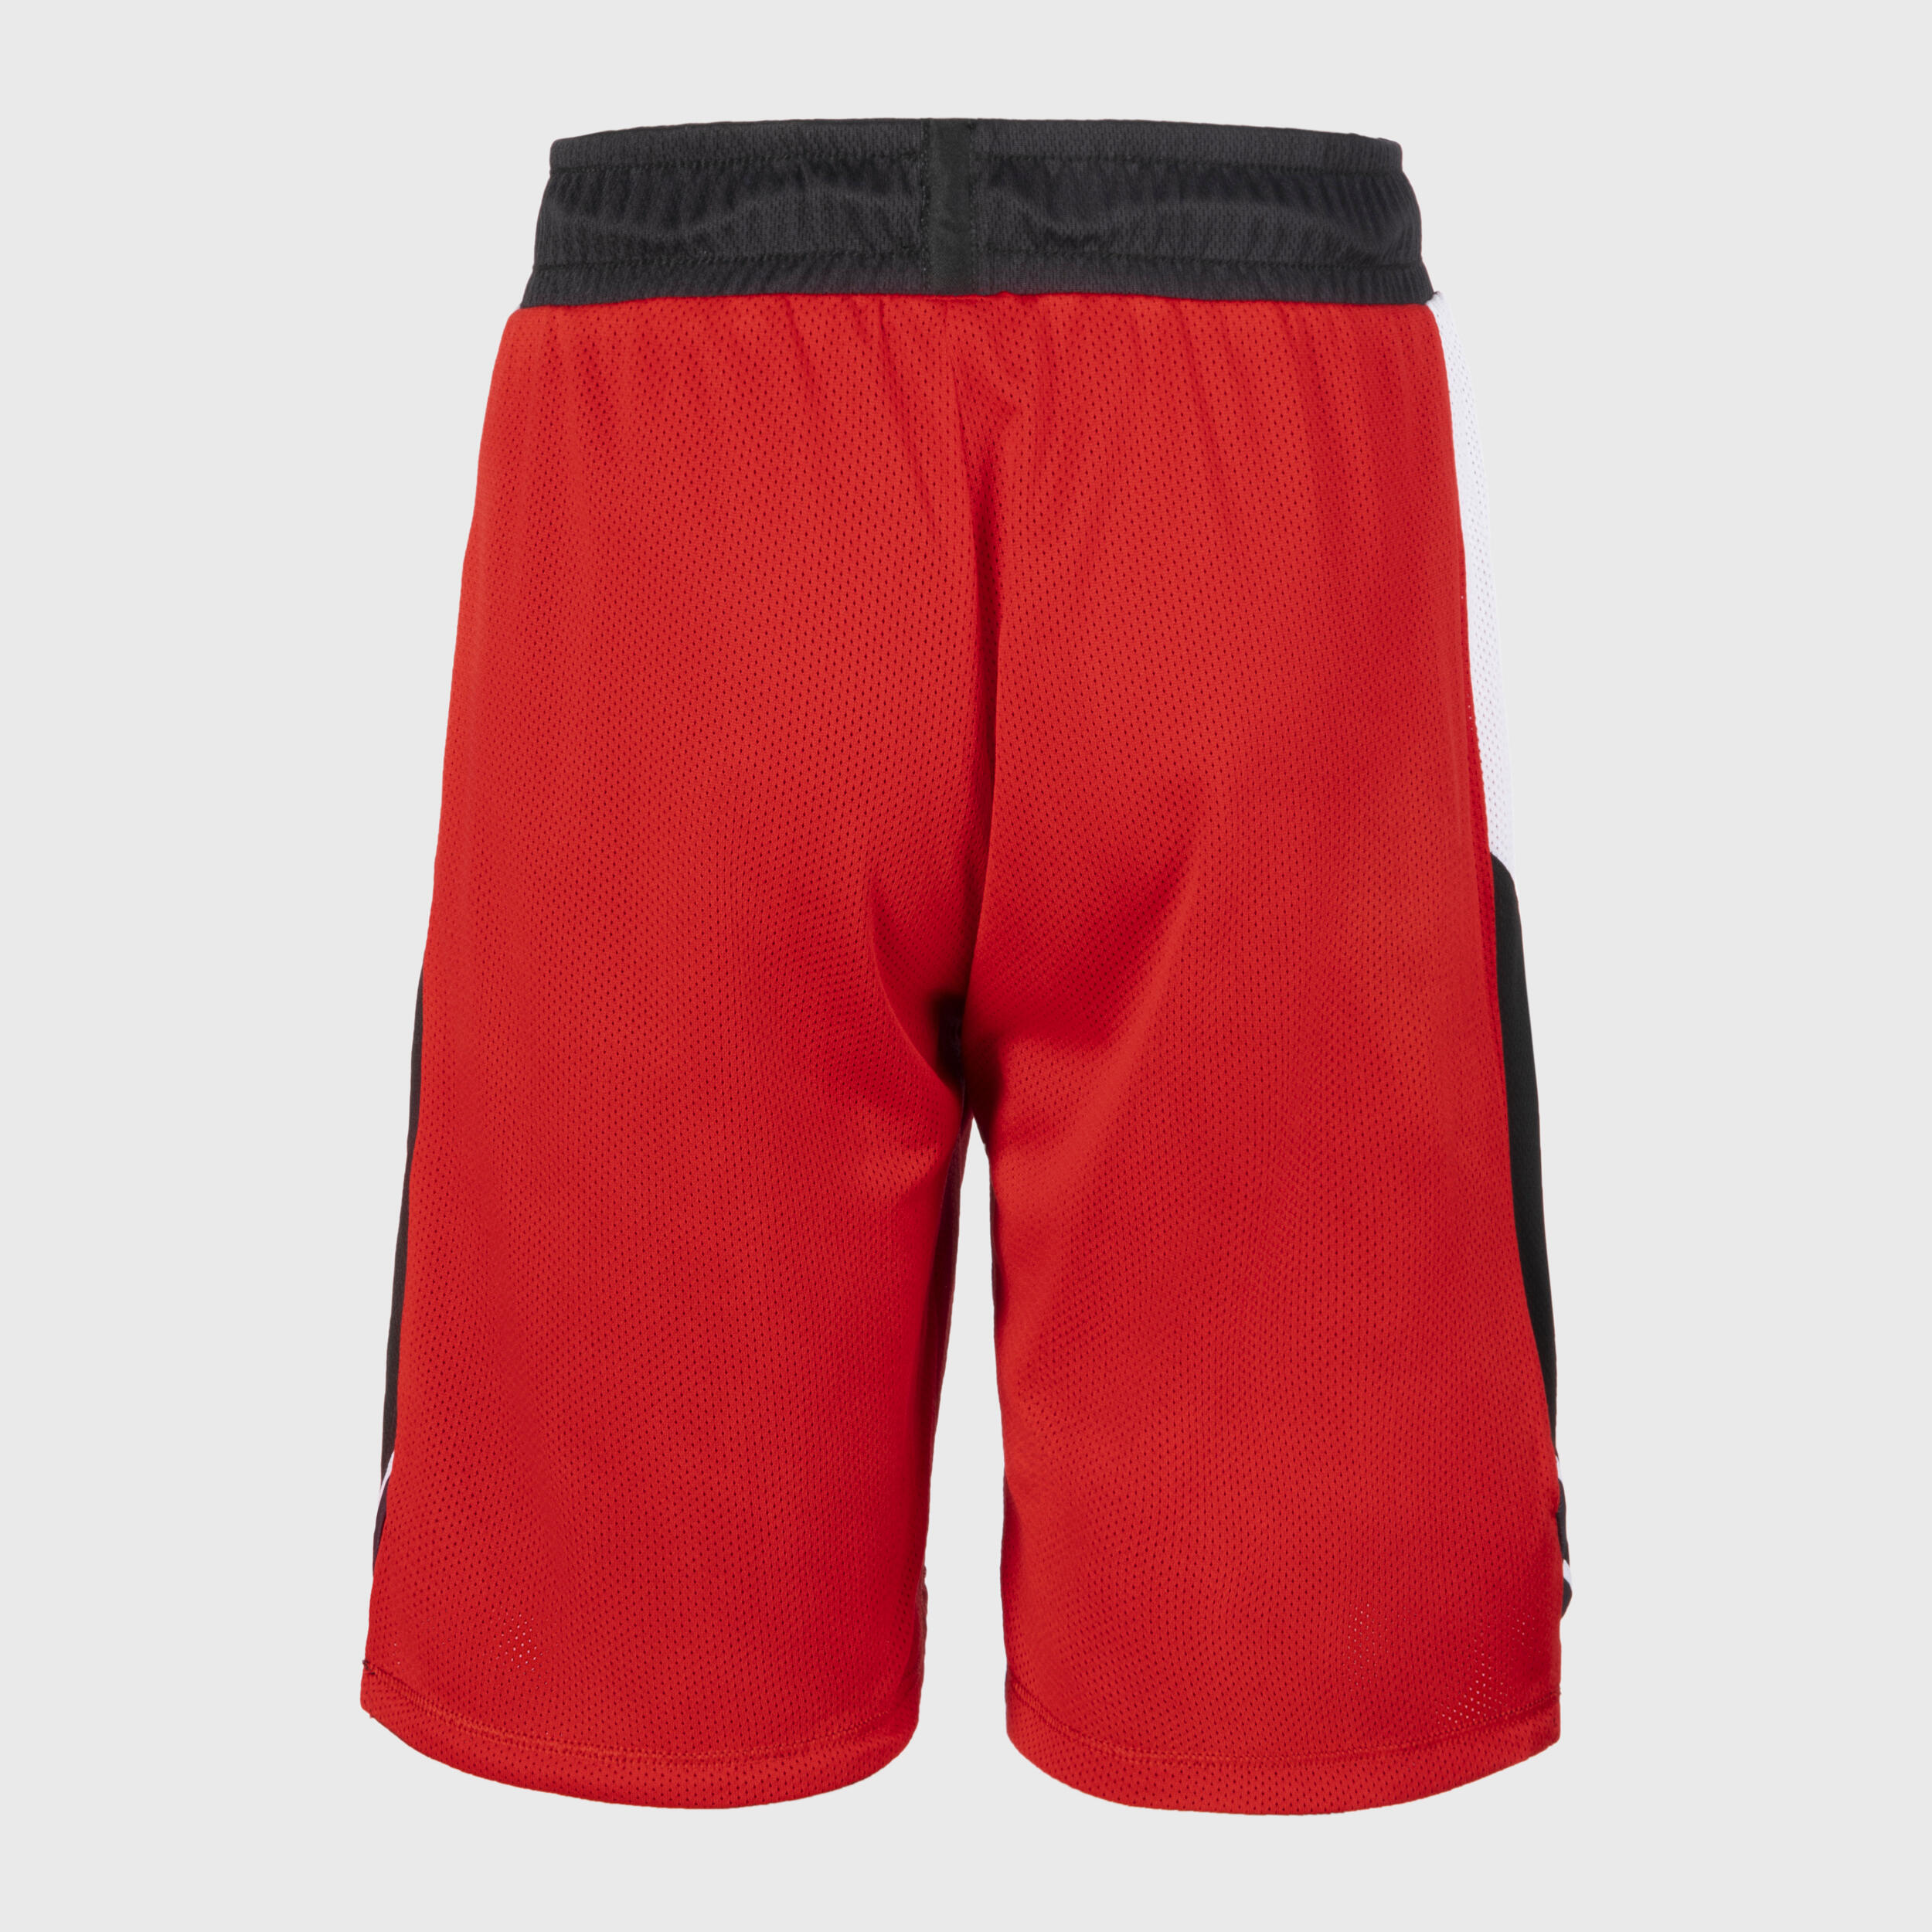 Kids' Reversible Basketball Shorts SH500R - Black/Red 7/11